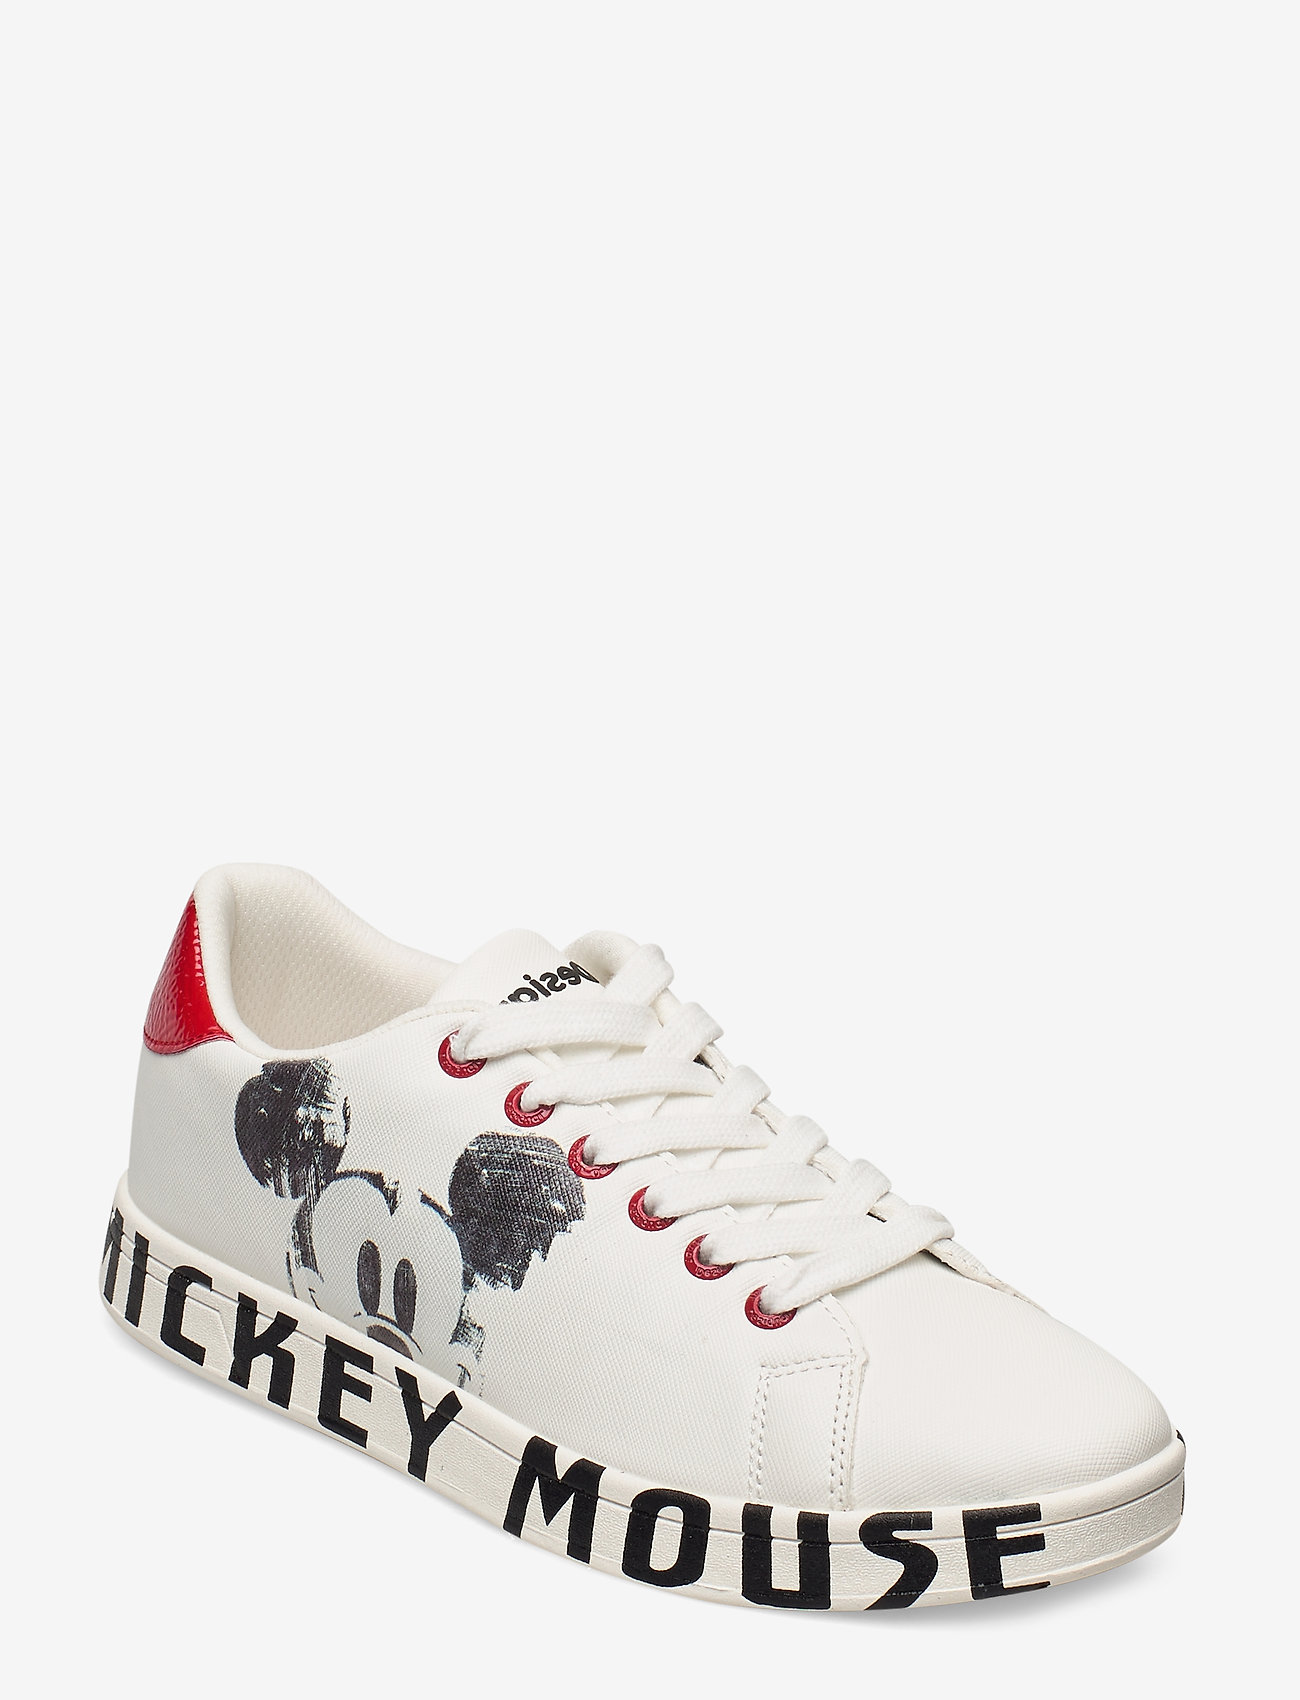 Shoes Cosmic Mickey (Blanco) (59.96 